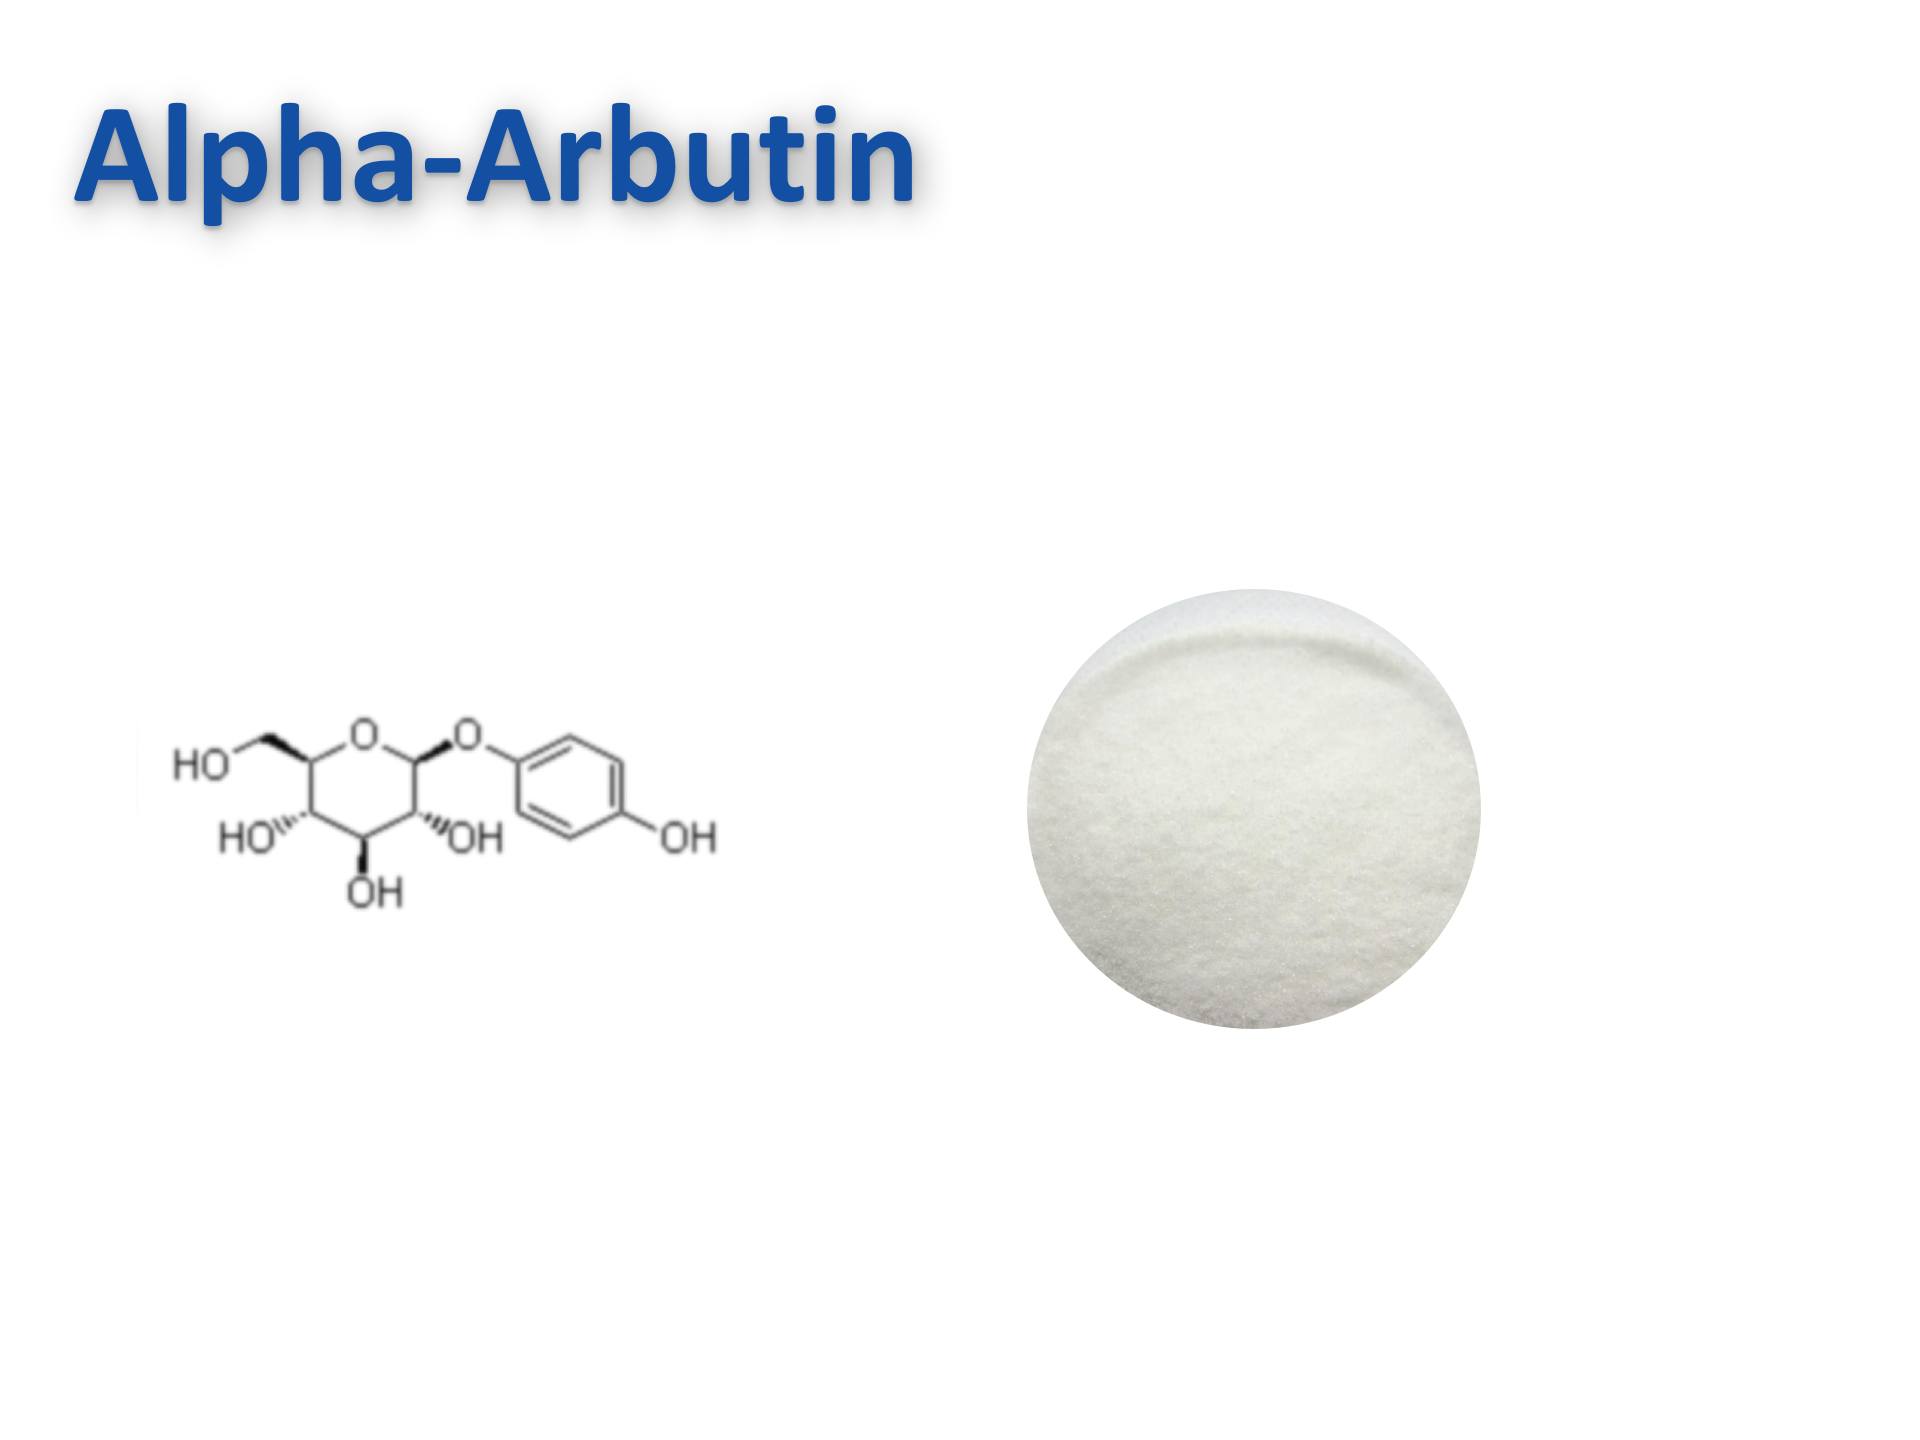 Alpha-Arbutine